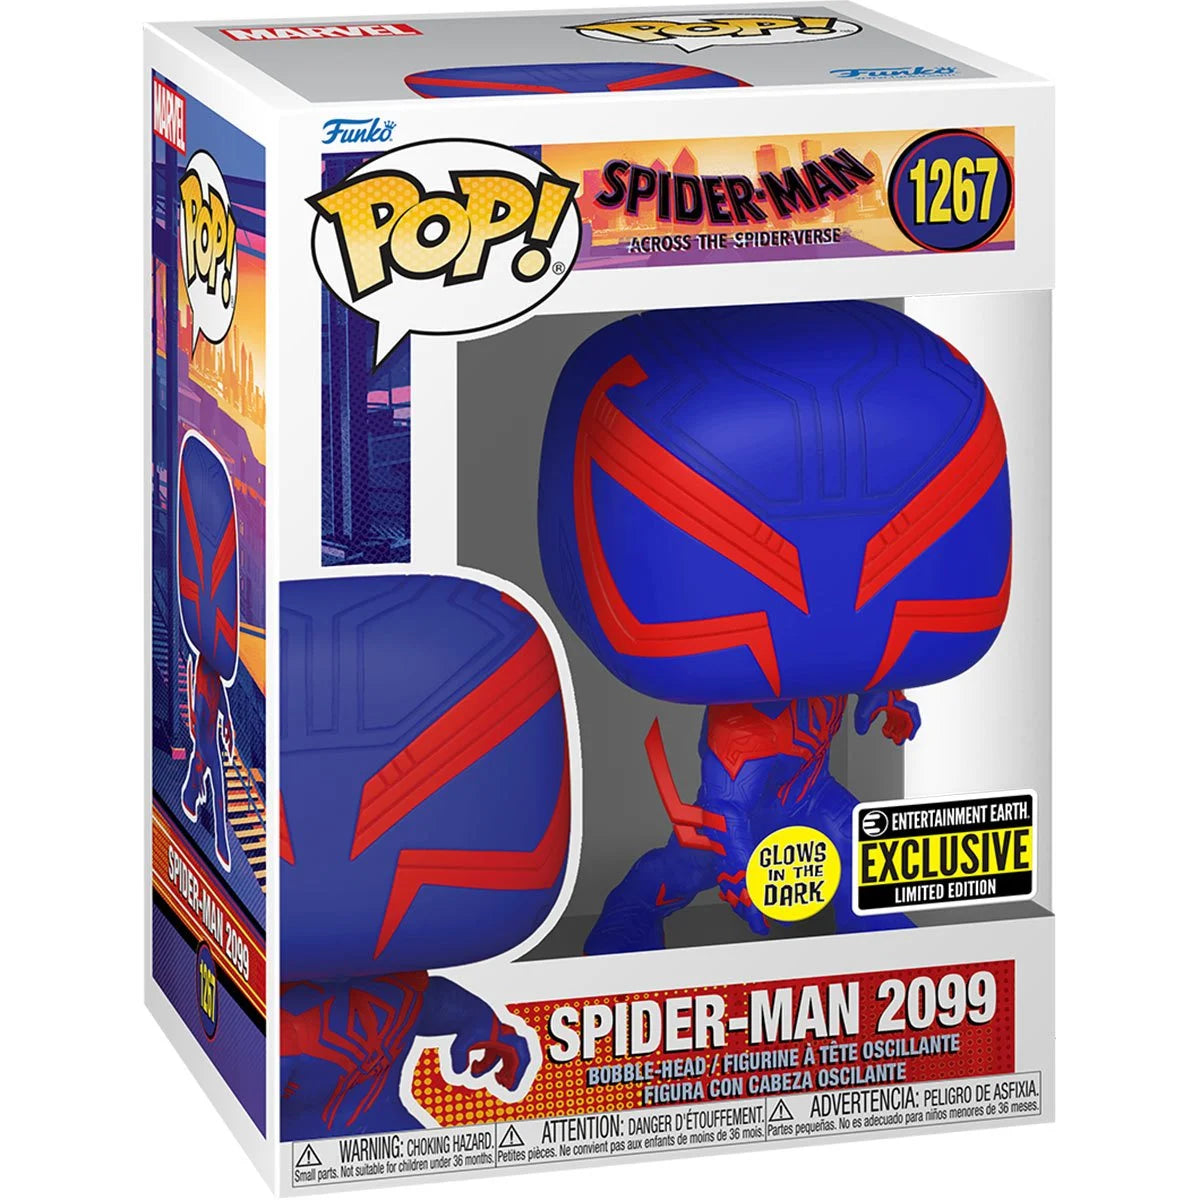 Spider-Man: Across the Spider-Verse Spider-Man 2099 Glow-in-the-Dark Pop! Vinyl Figure #1267 - Entertainment Earth Excl. Funko